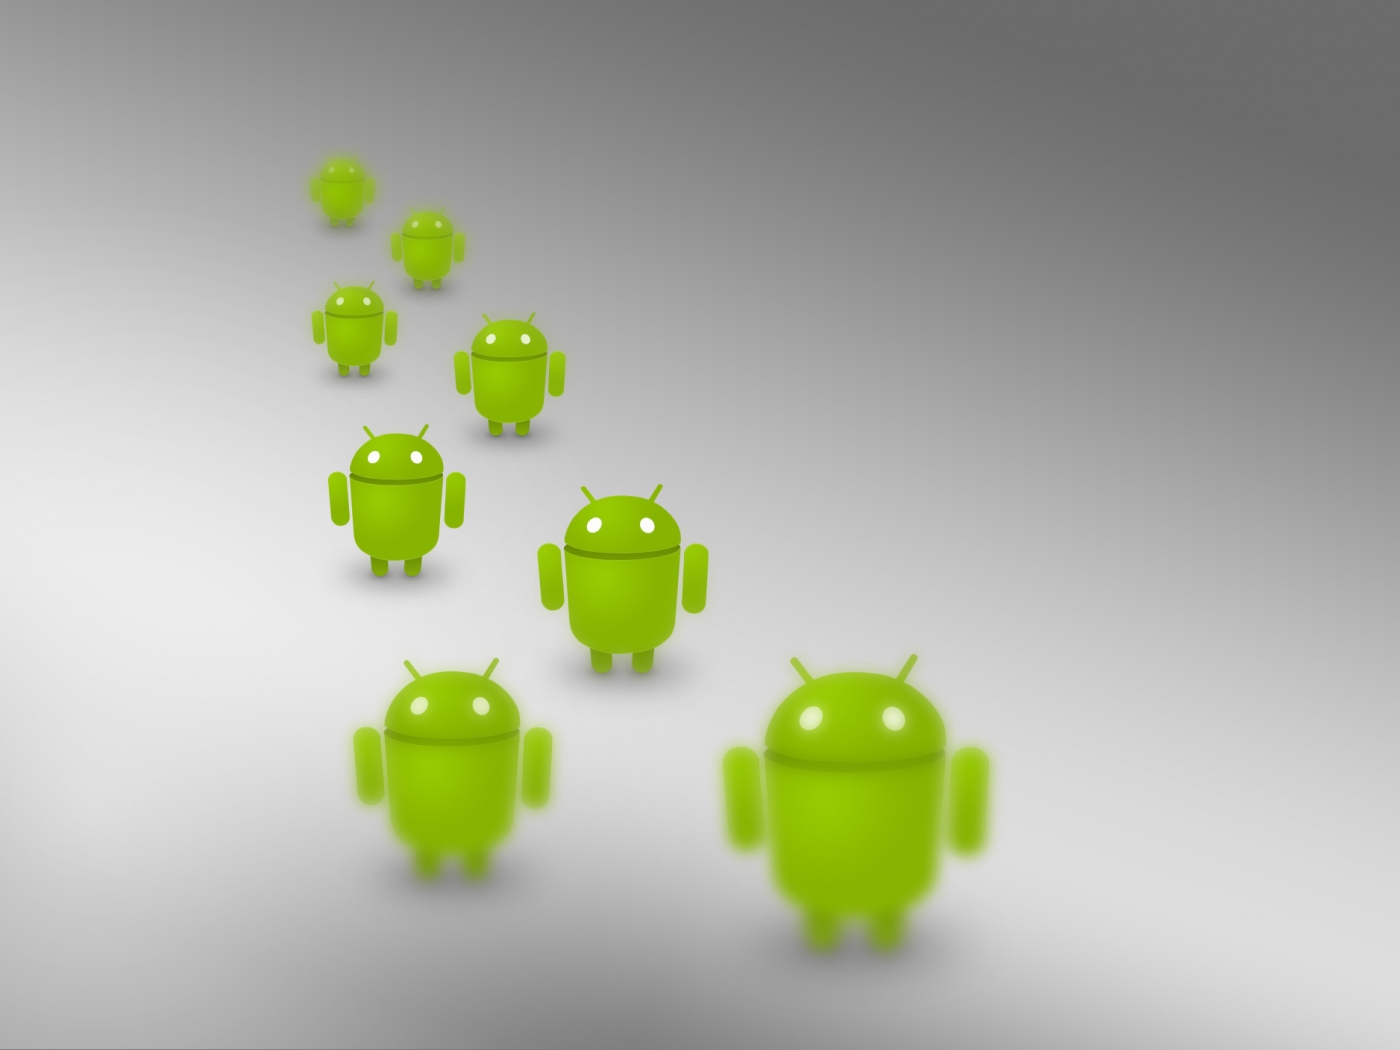 Скачать обои бесплатно Фон, Андроид (Android), Логотипы картинка на рабочий стол ПК